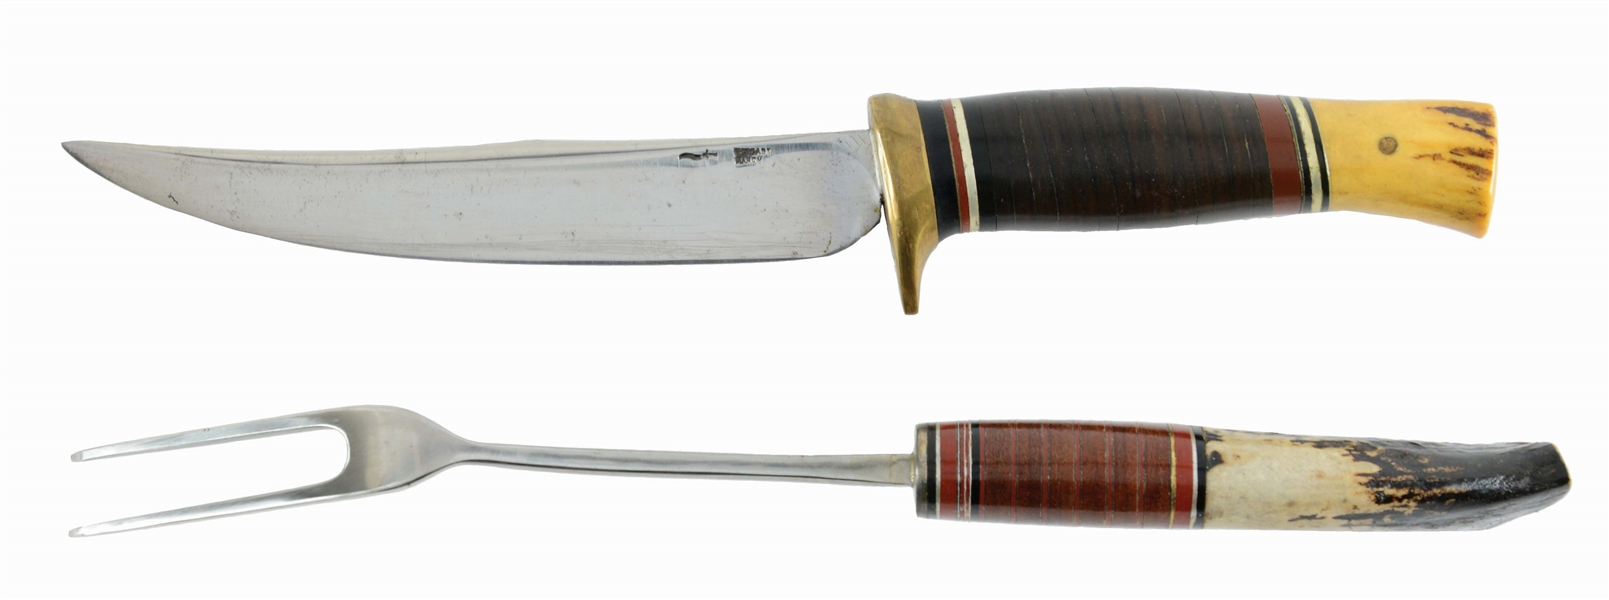 CLASSIC SCAGEL KNIFE & FORK CUTLERY.